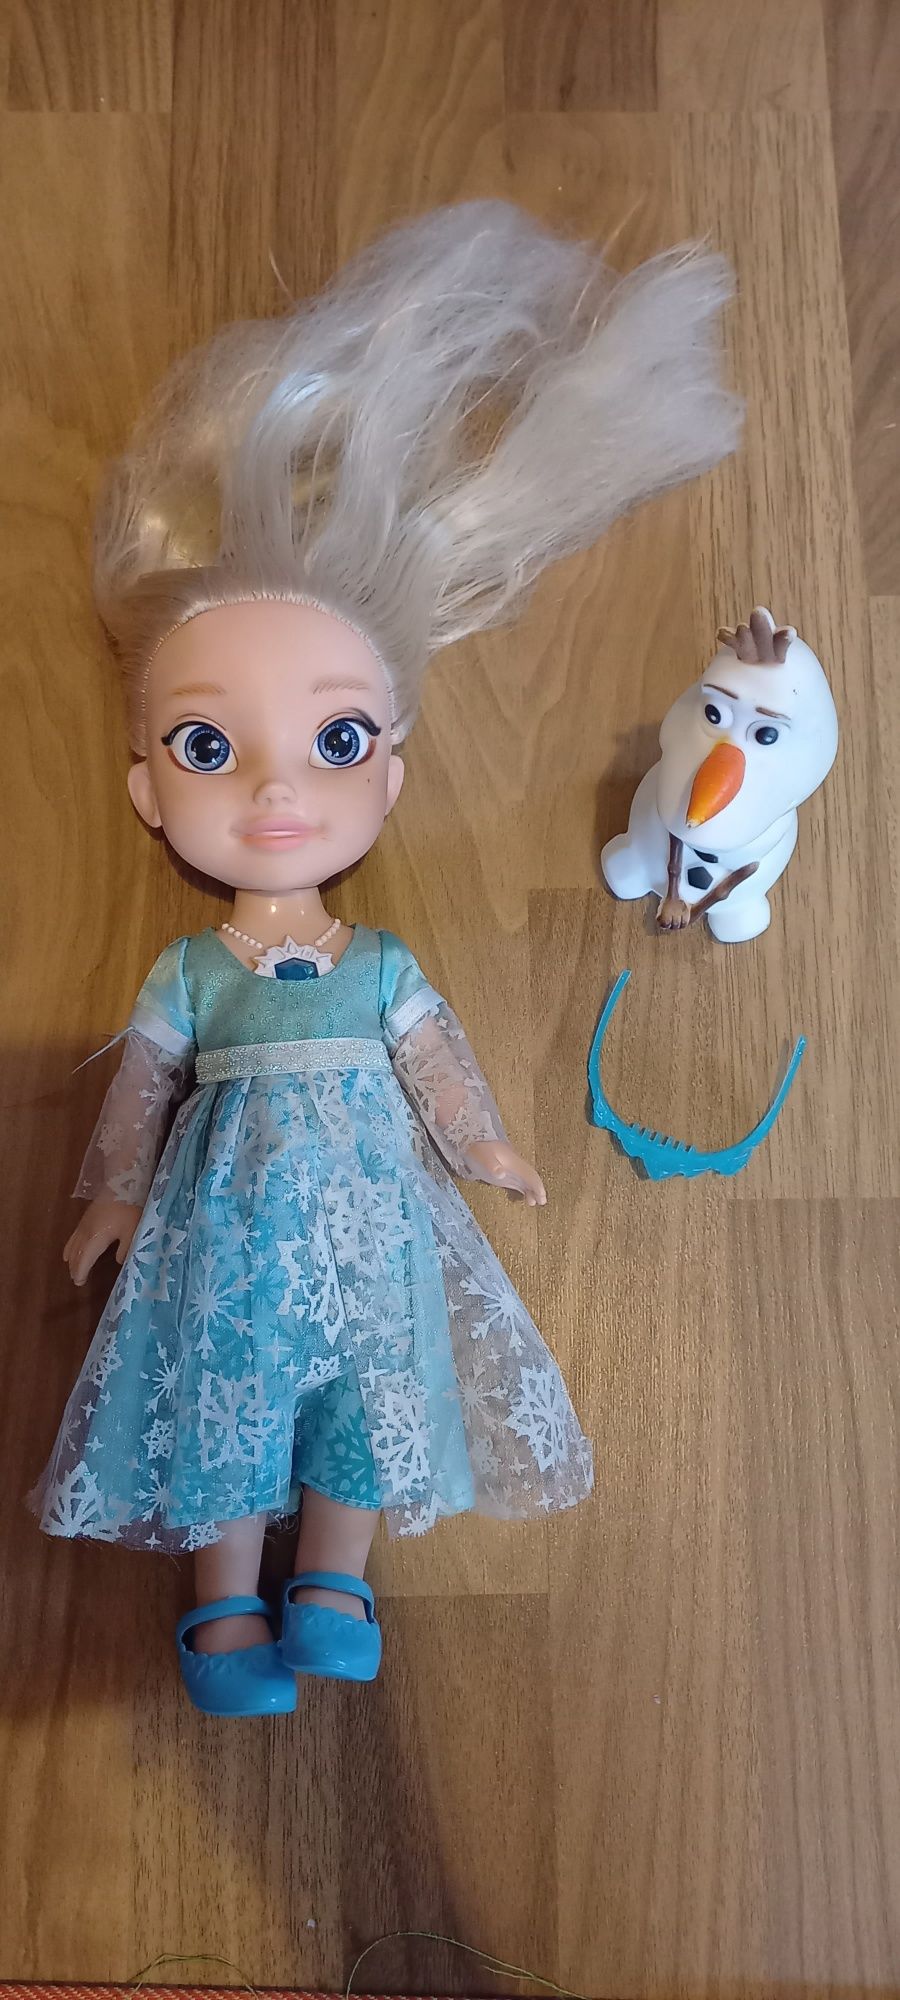 Elsa śpiewa i Olaf